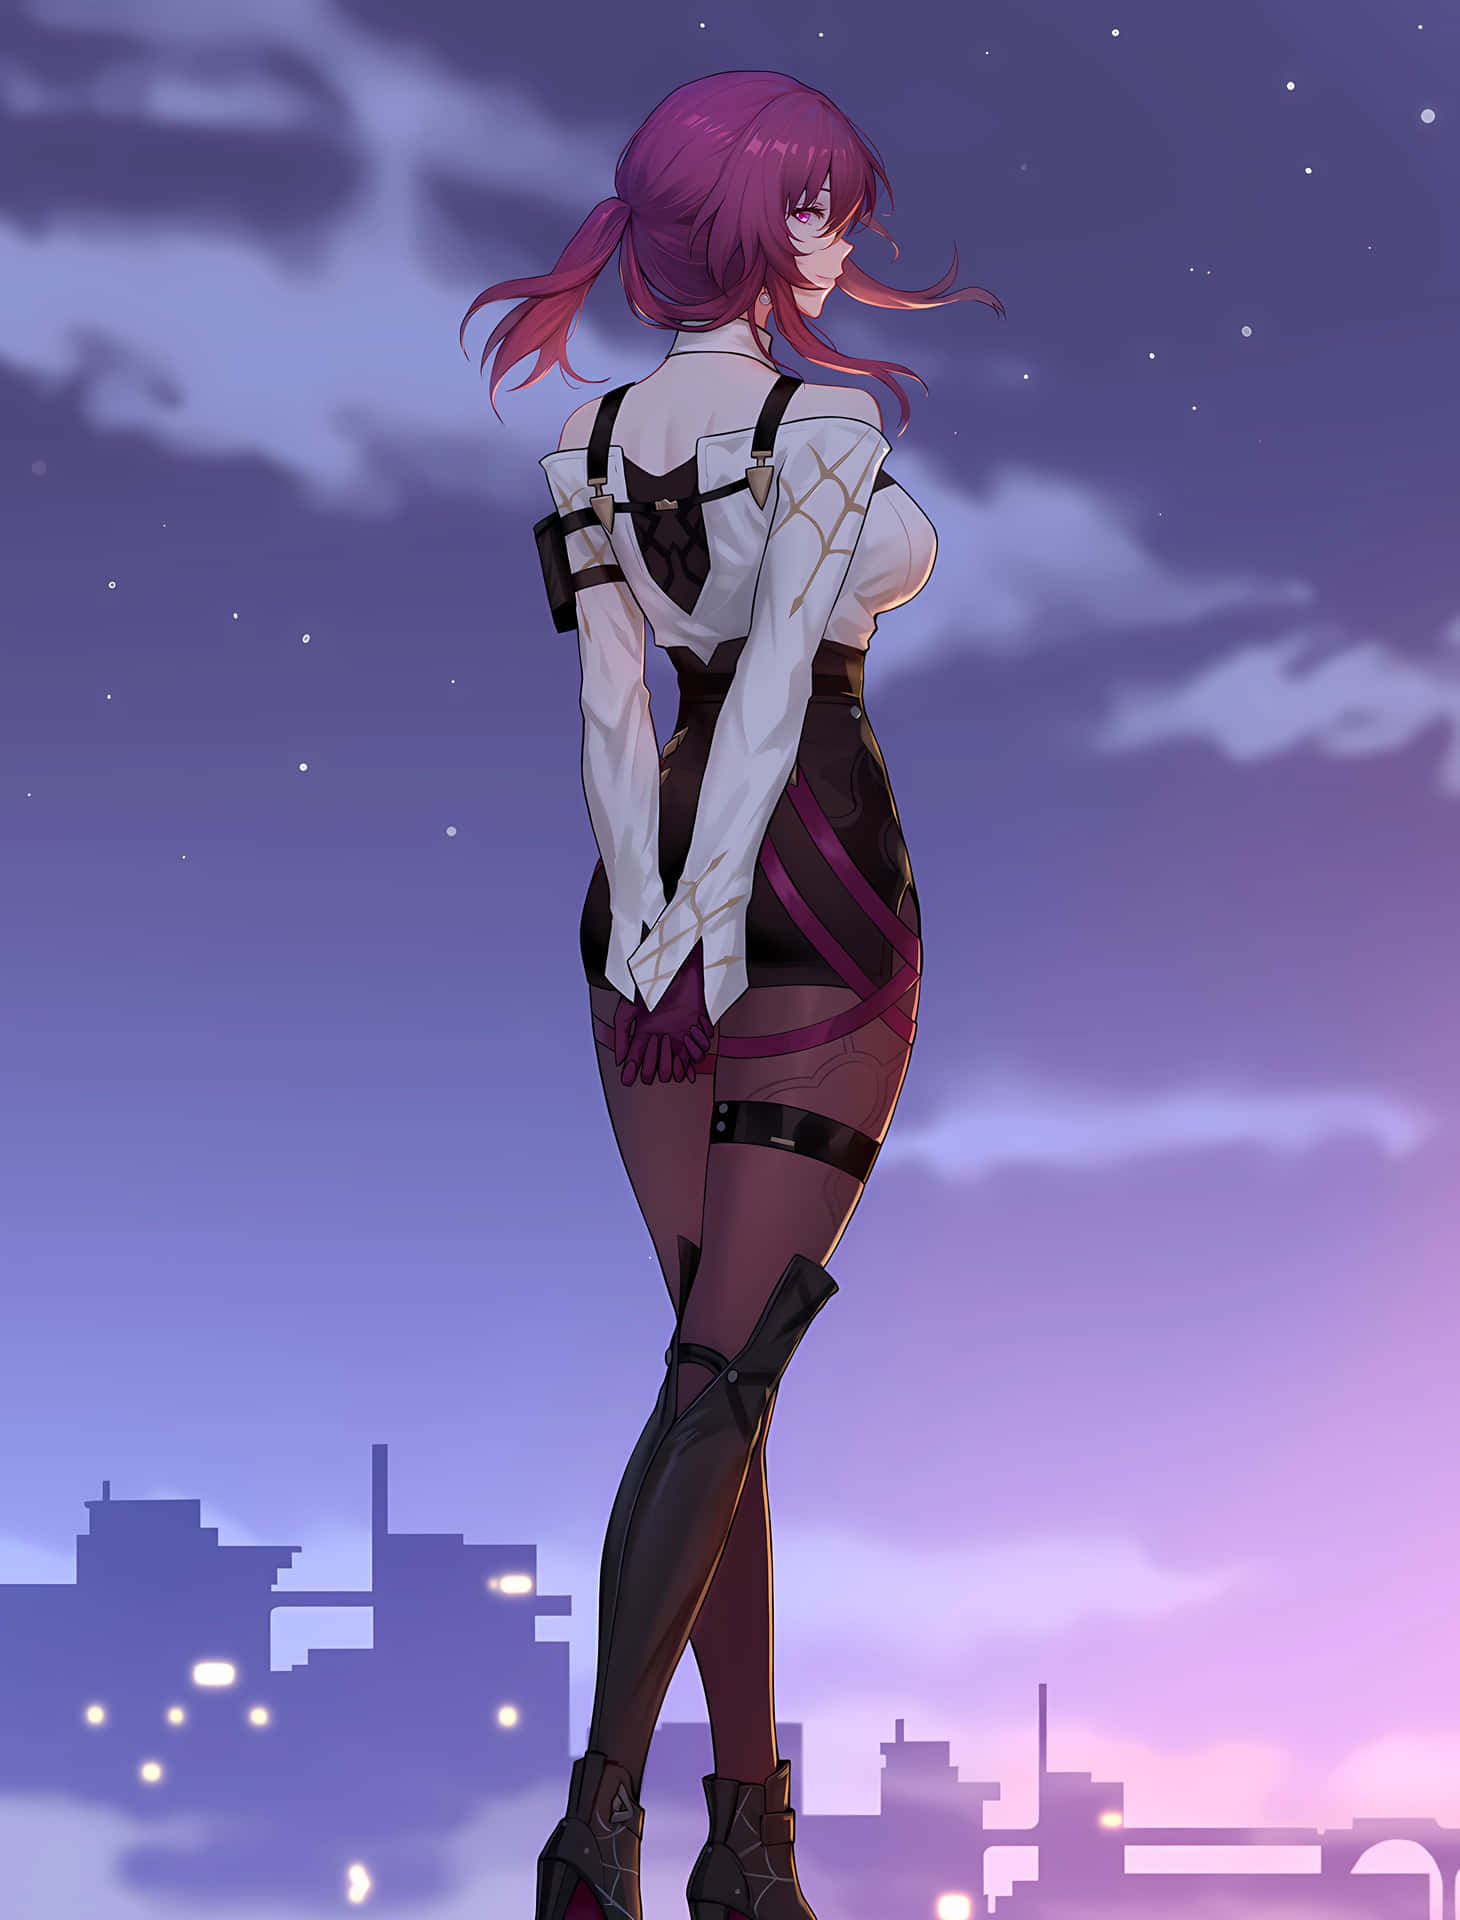 Twilight Anime Girl Overlooking City Wallpaper